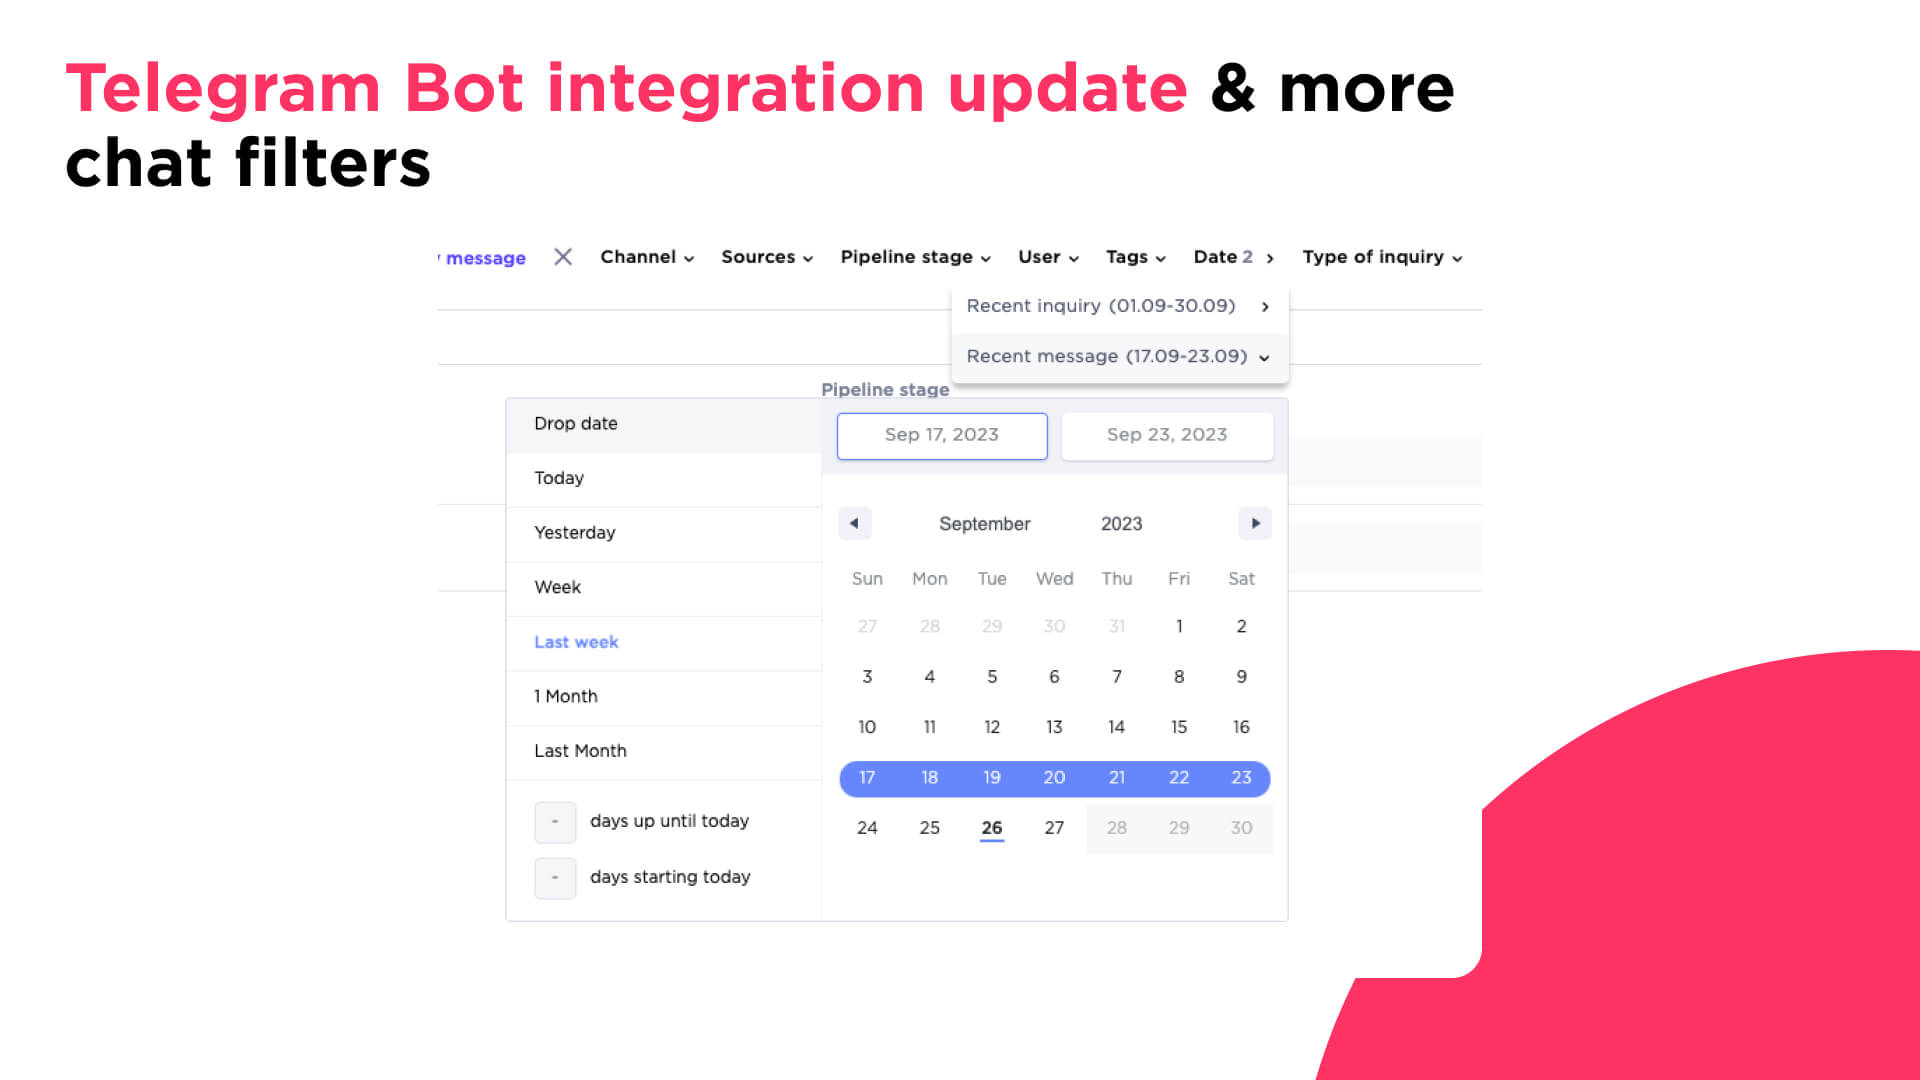 Telegram Bot integration update & more chat filters